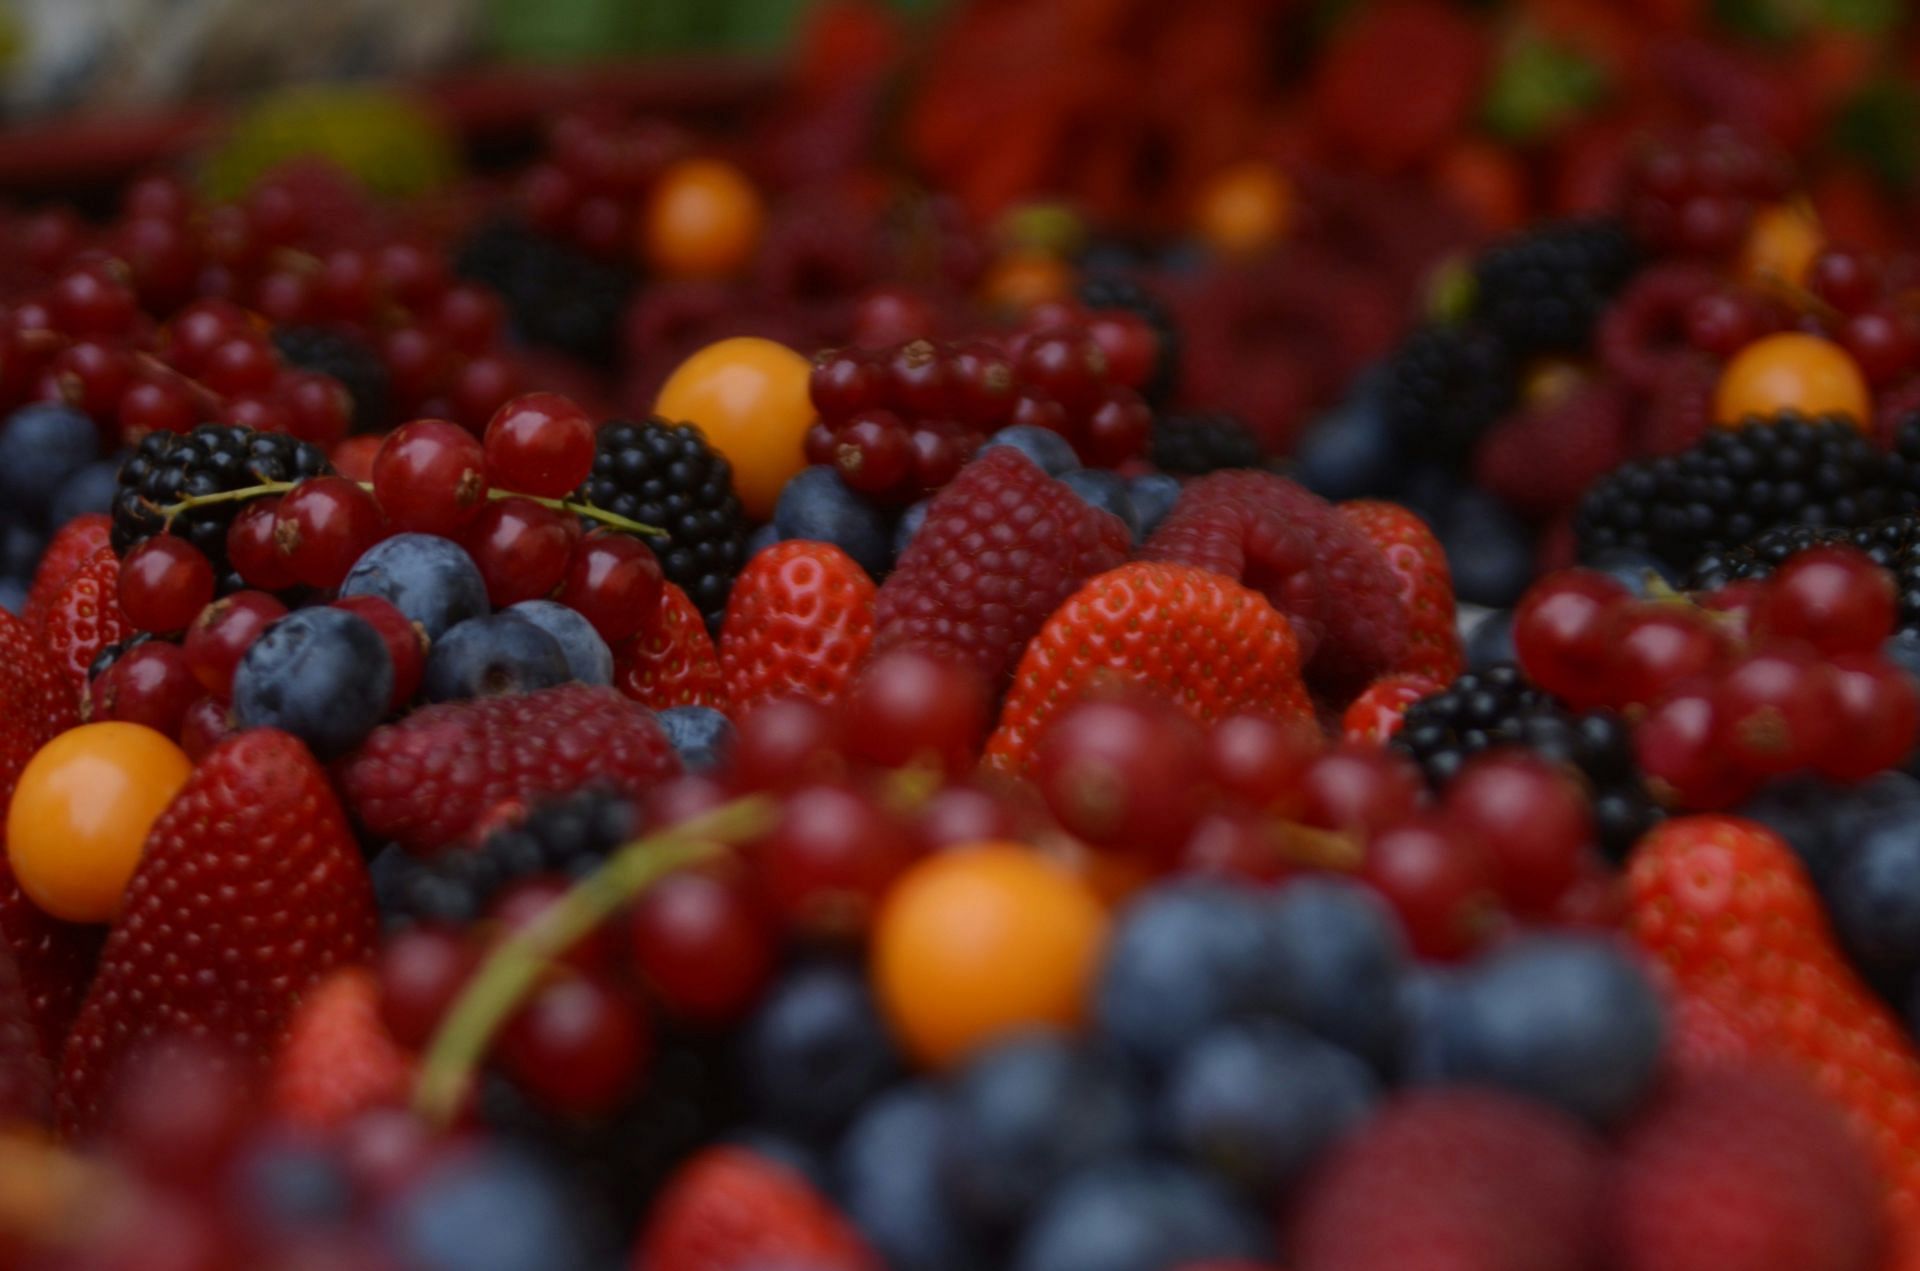 The fruit looks similar to a berry (Image by Karoline Stk/Unsplash)